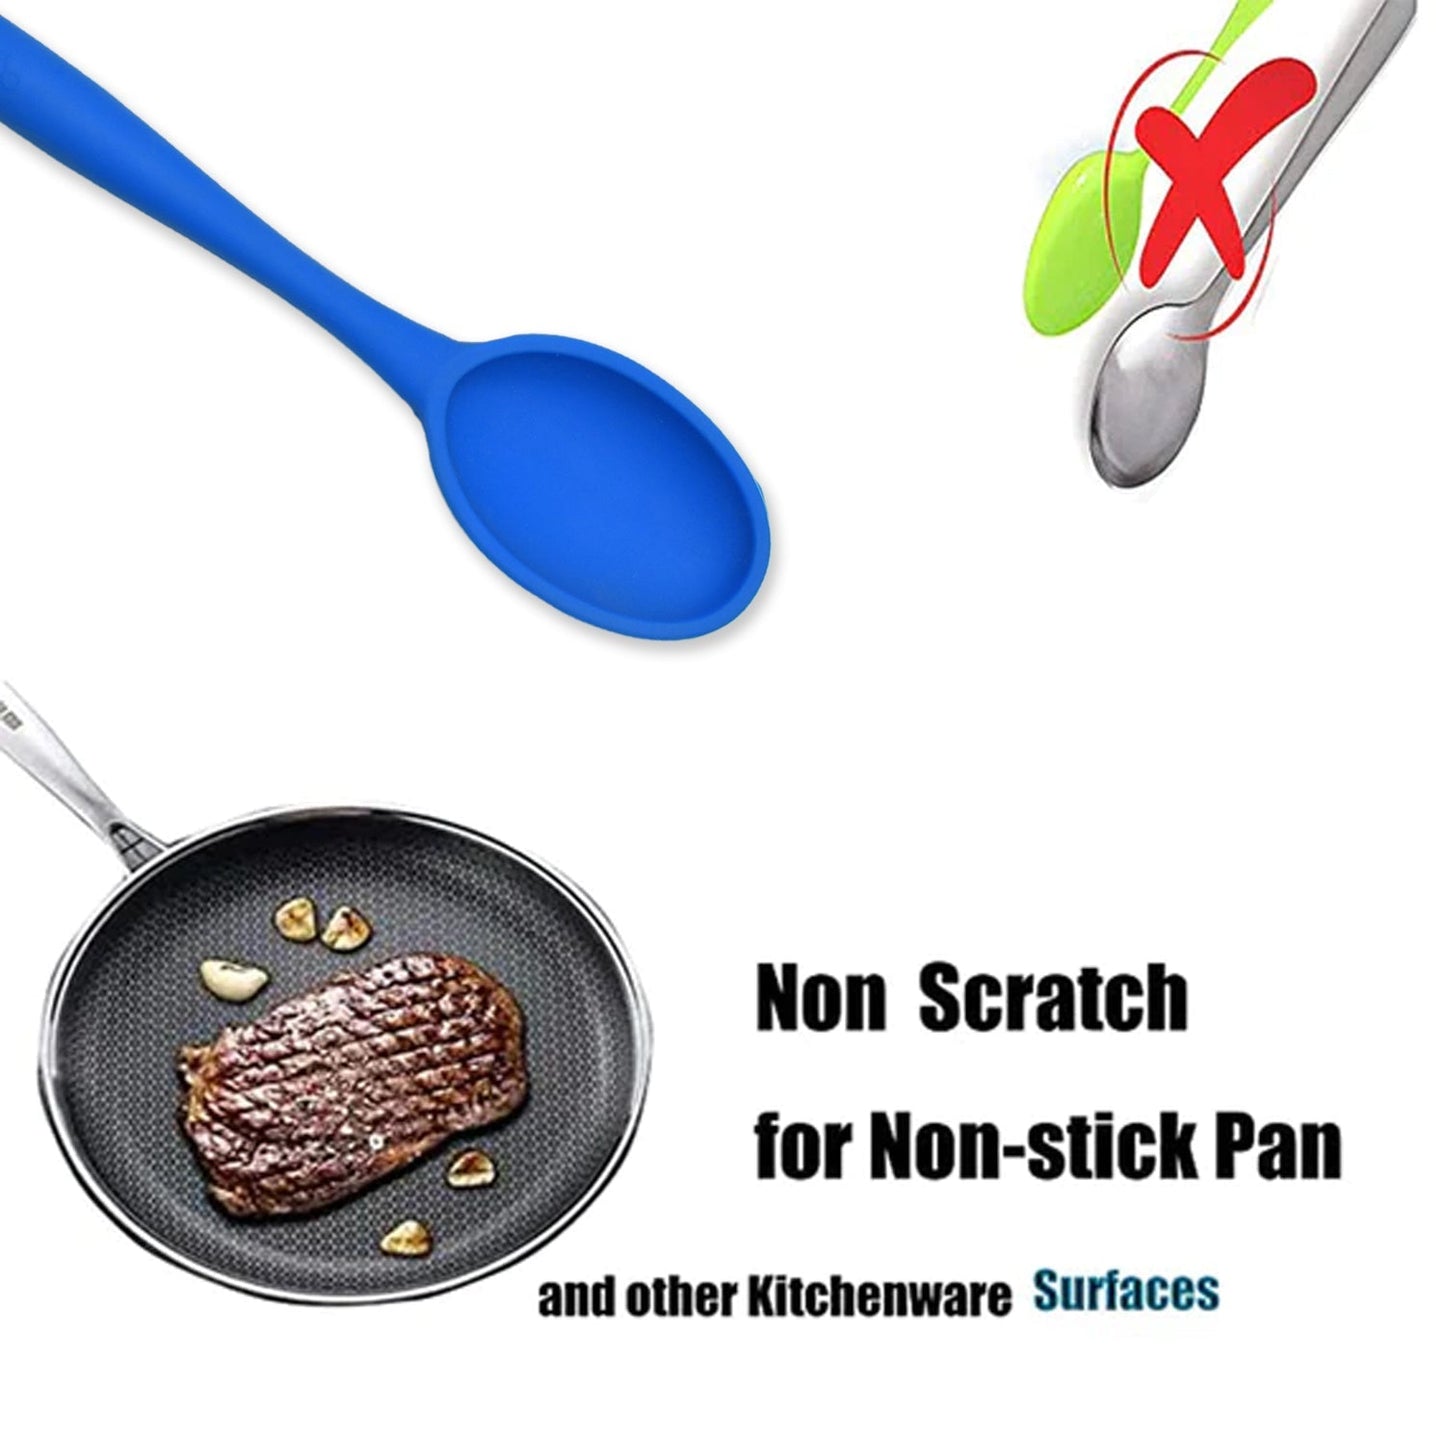 5403 Silicone Small Spoon Scoop Kitchen Utensils Tool Flatware. JK Trends